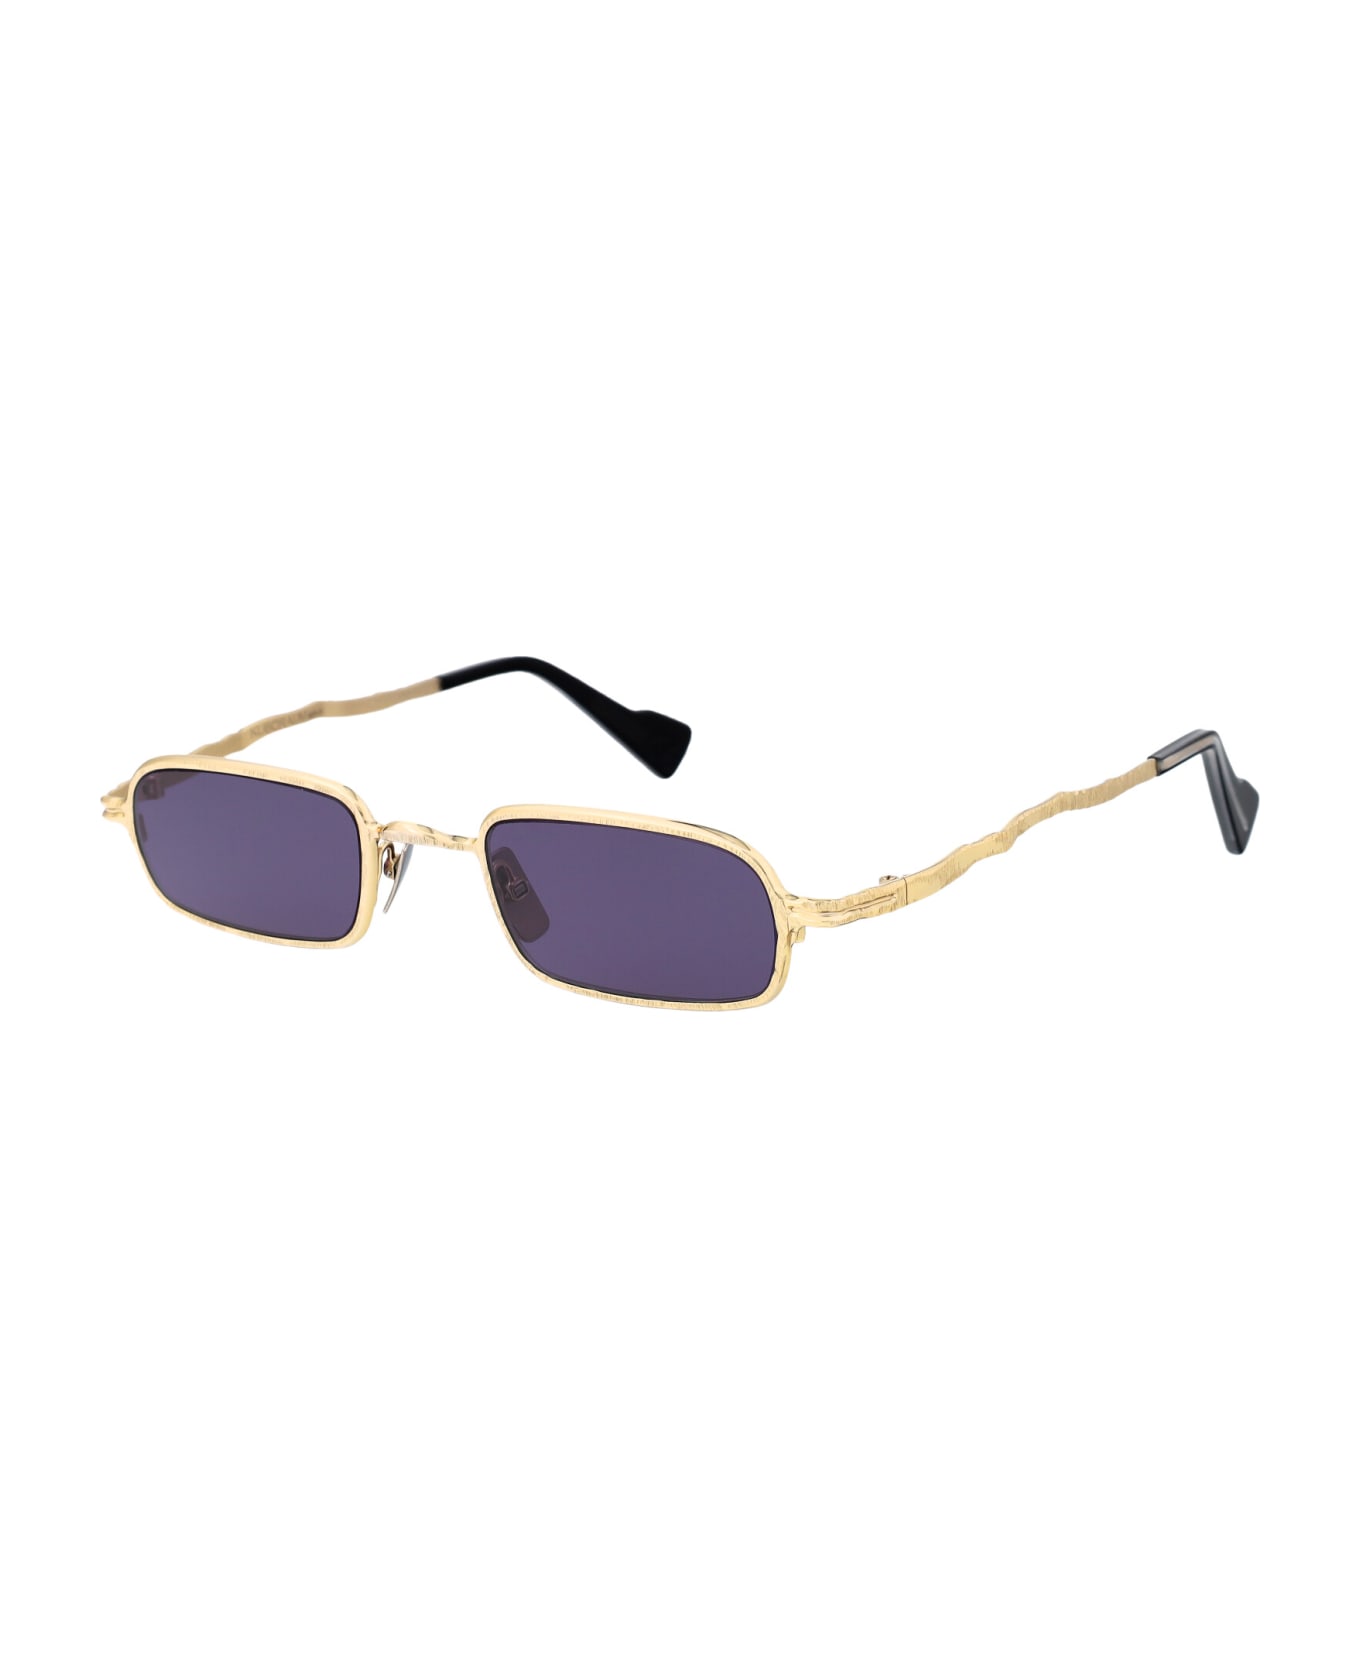 Kuboraum Maske Z18 Sunglasses - GG violet